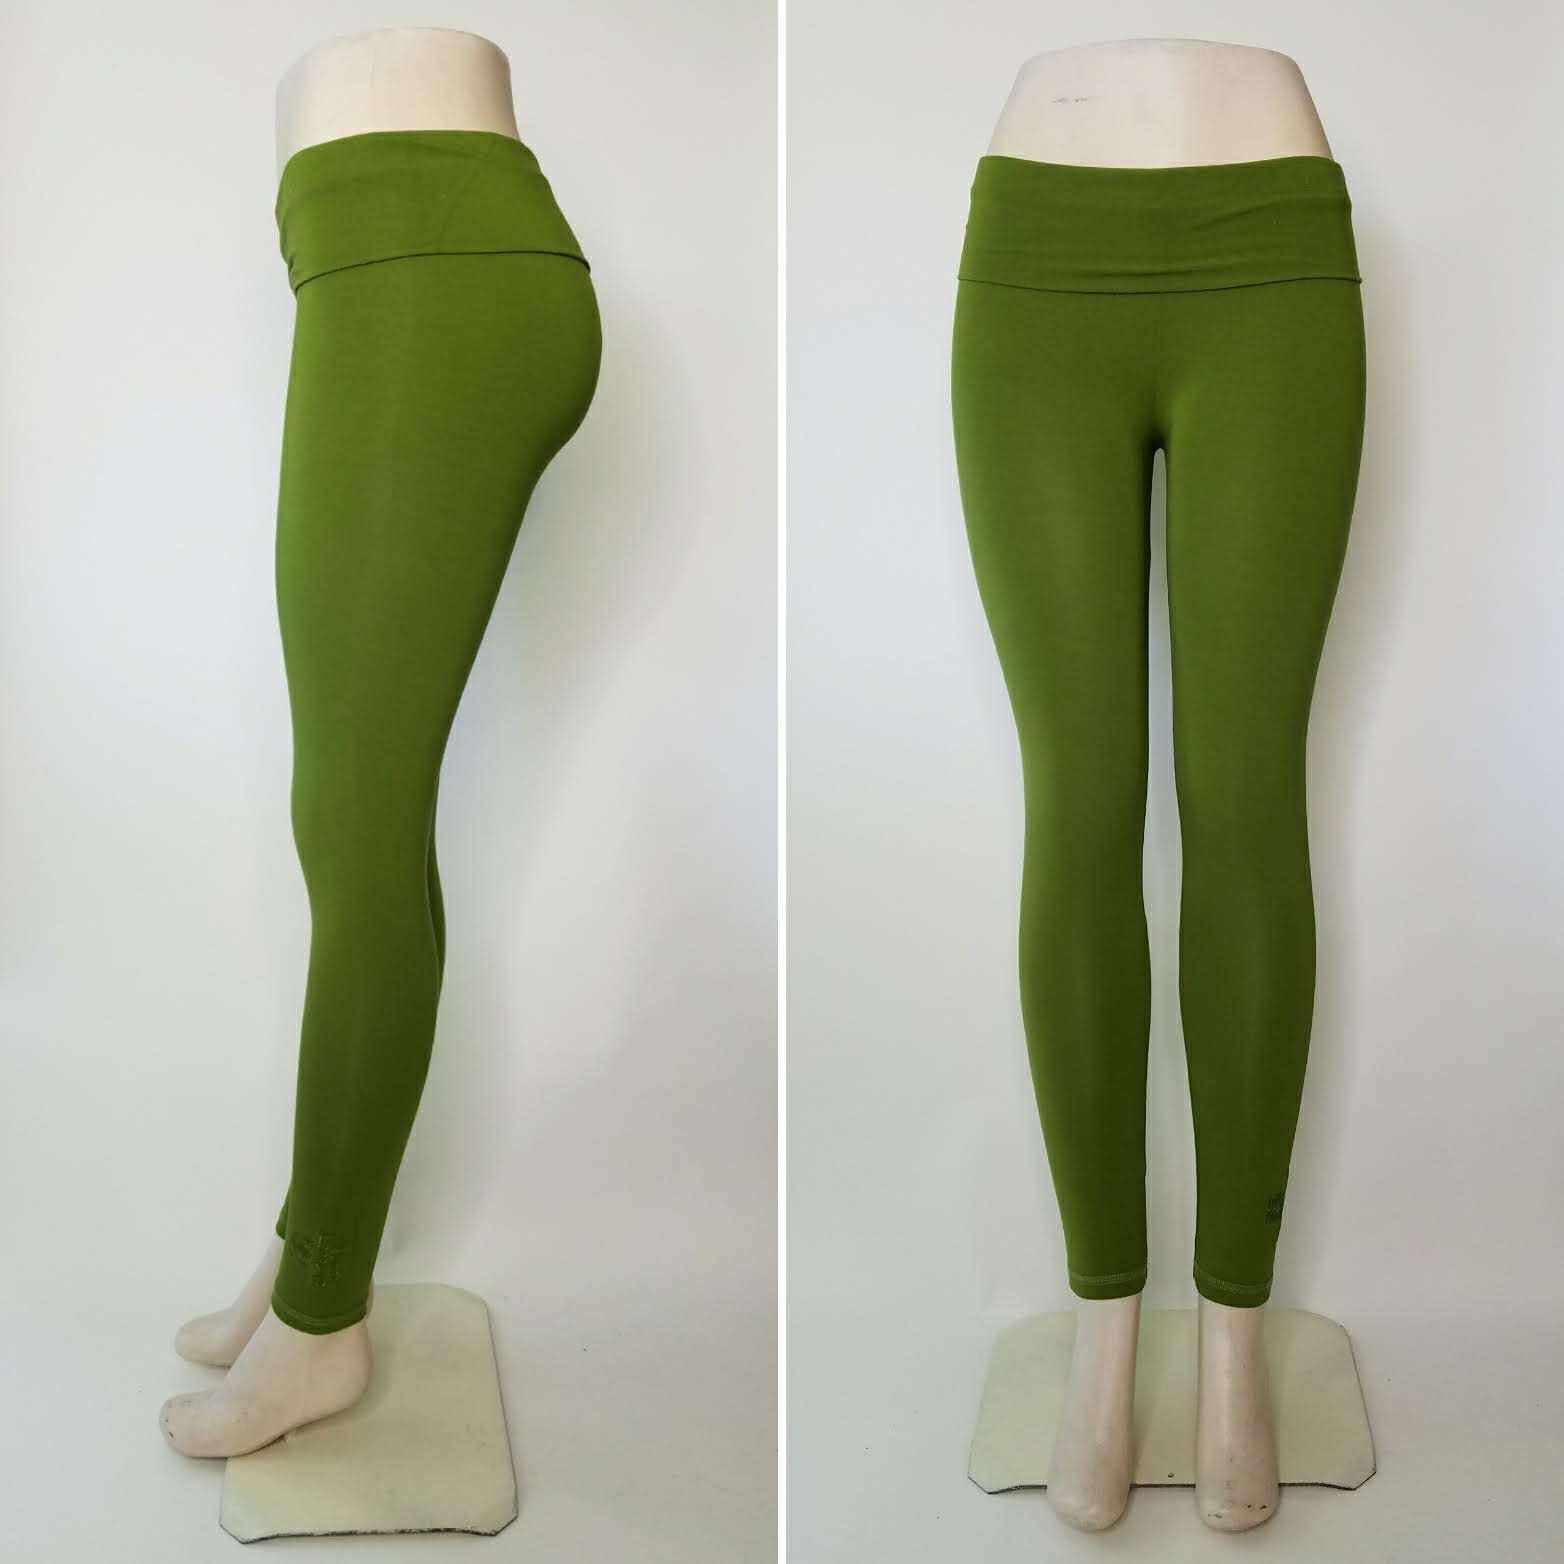 https://bambootybodygear.com/wp-content/uploads/2018/06/Bambooty-Yoga-Pant-Lime-Green-Mannequin.jpg